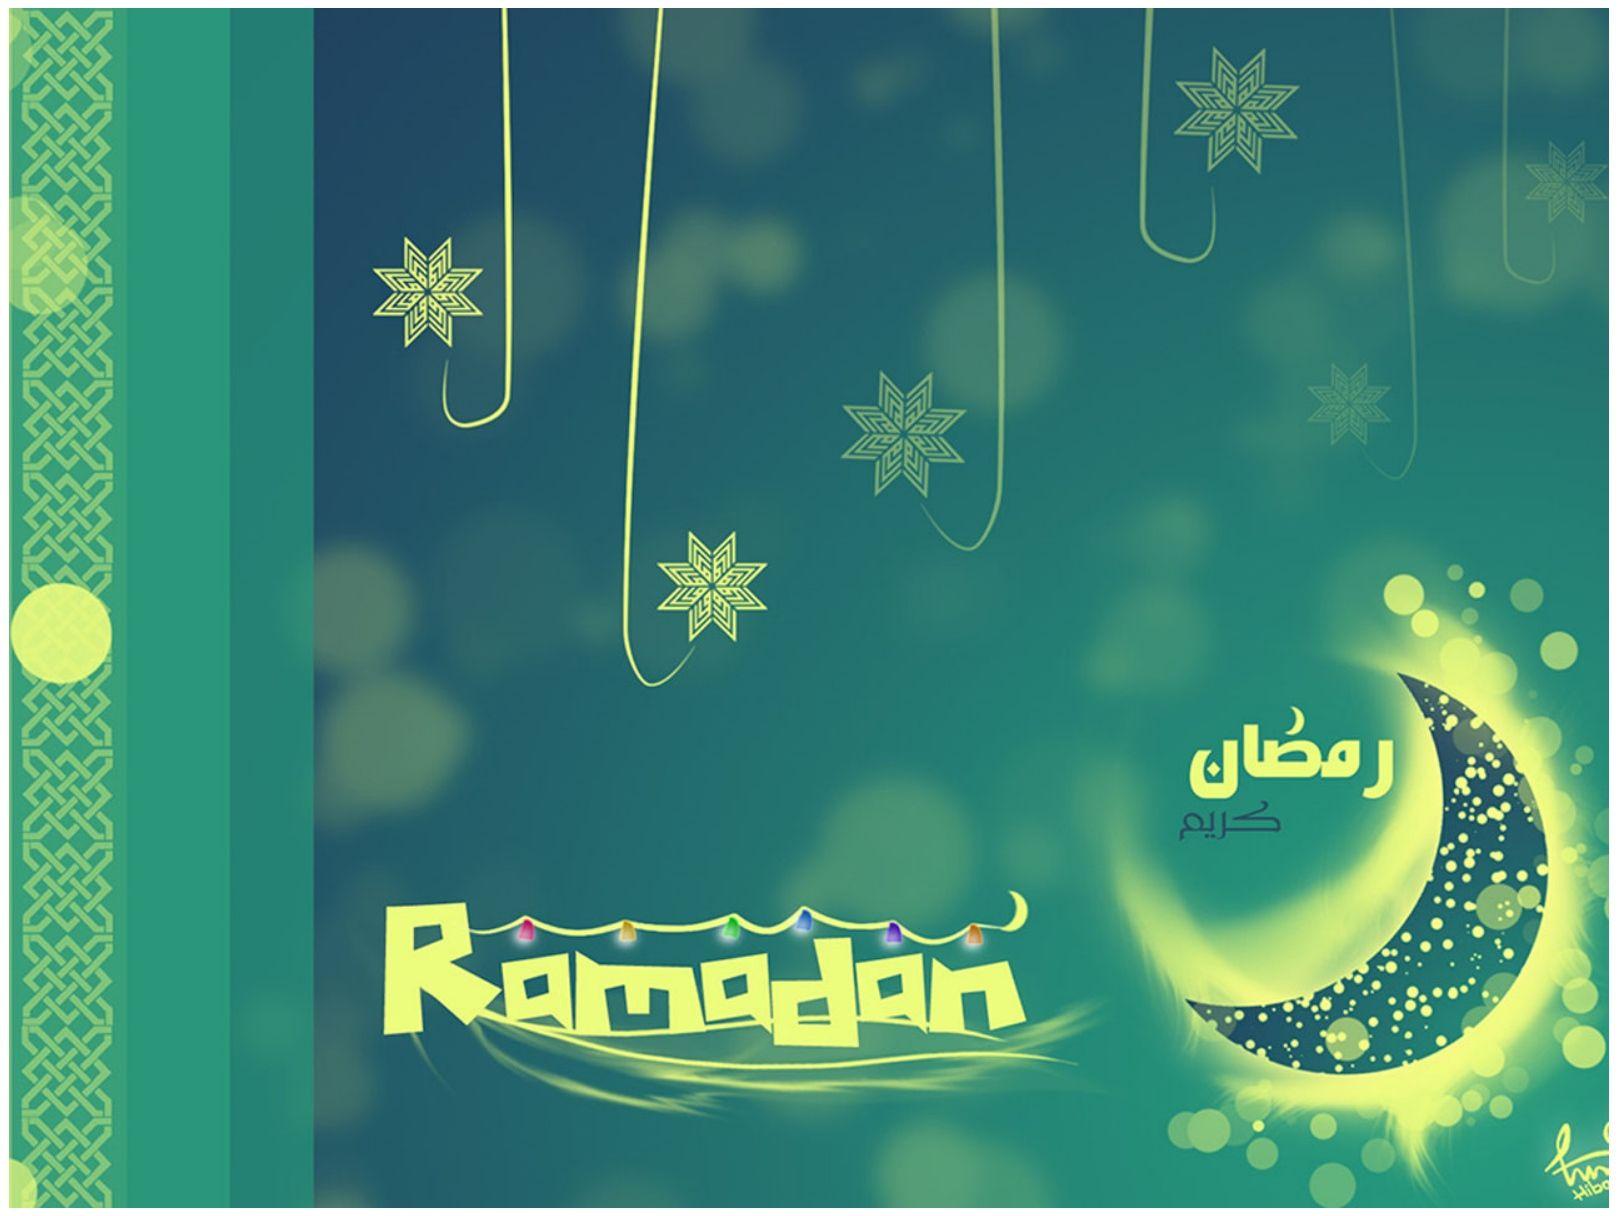 Ramzan HD Free Islamic High Quality Wallpaper. Wallpaper